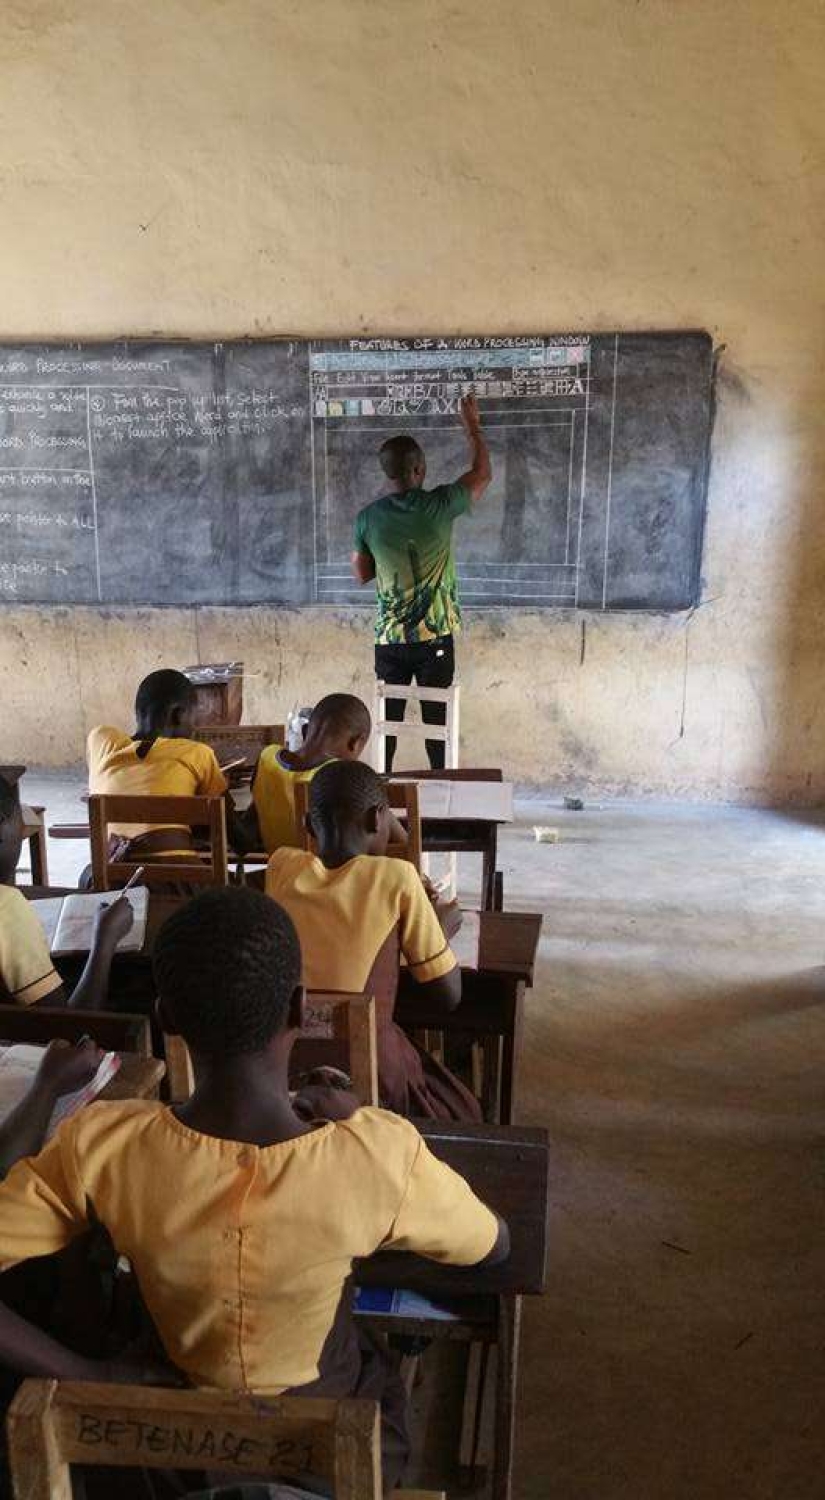 Microsoft Word, blackboard, chalk: photo of a computer science teacher at a village school in Ghana flew around social networks